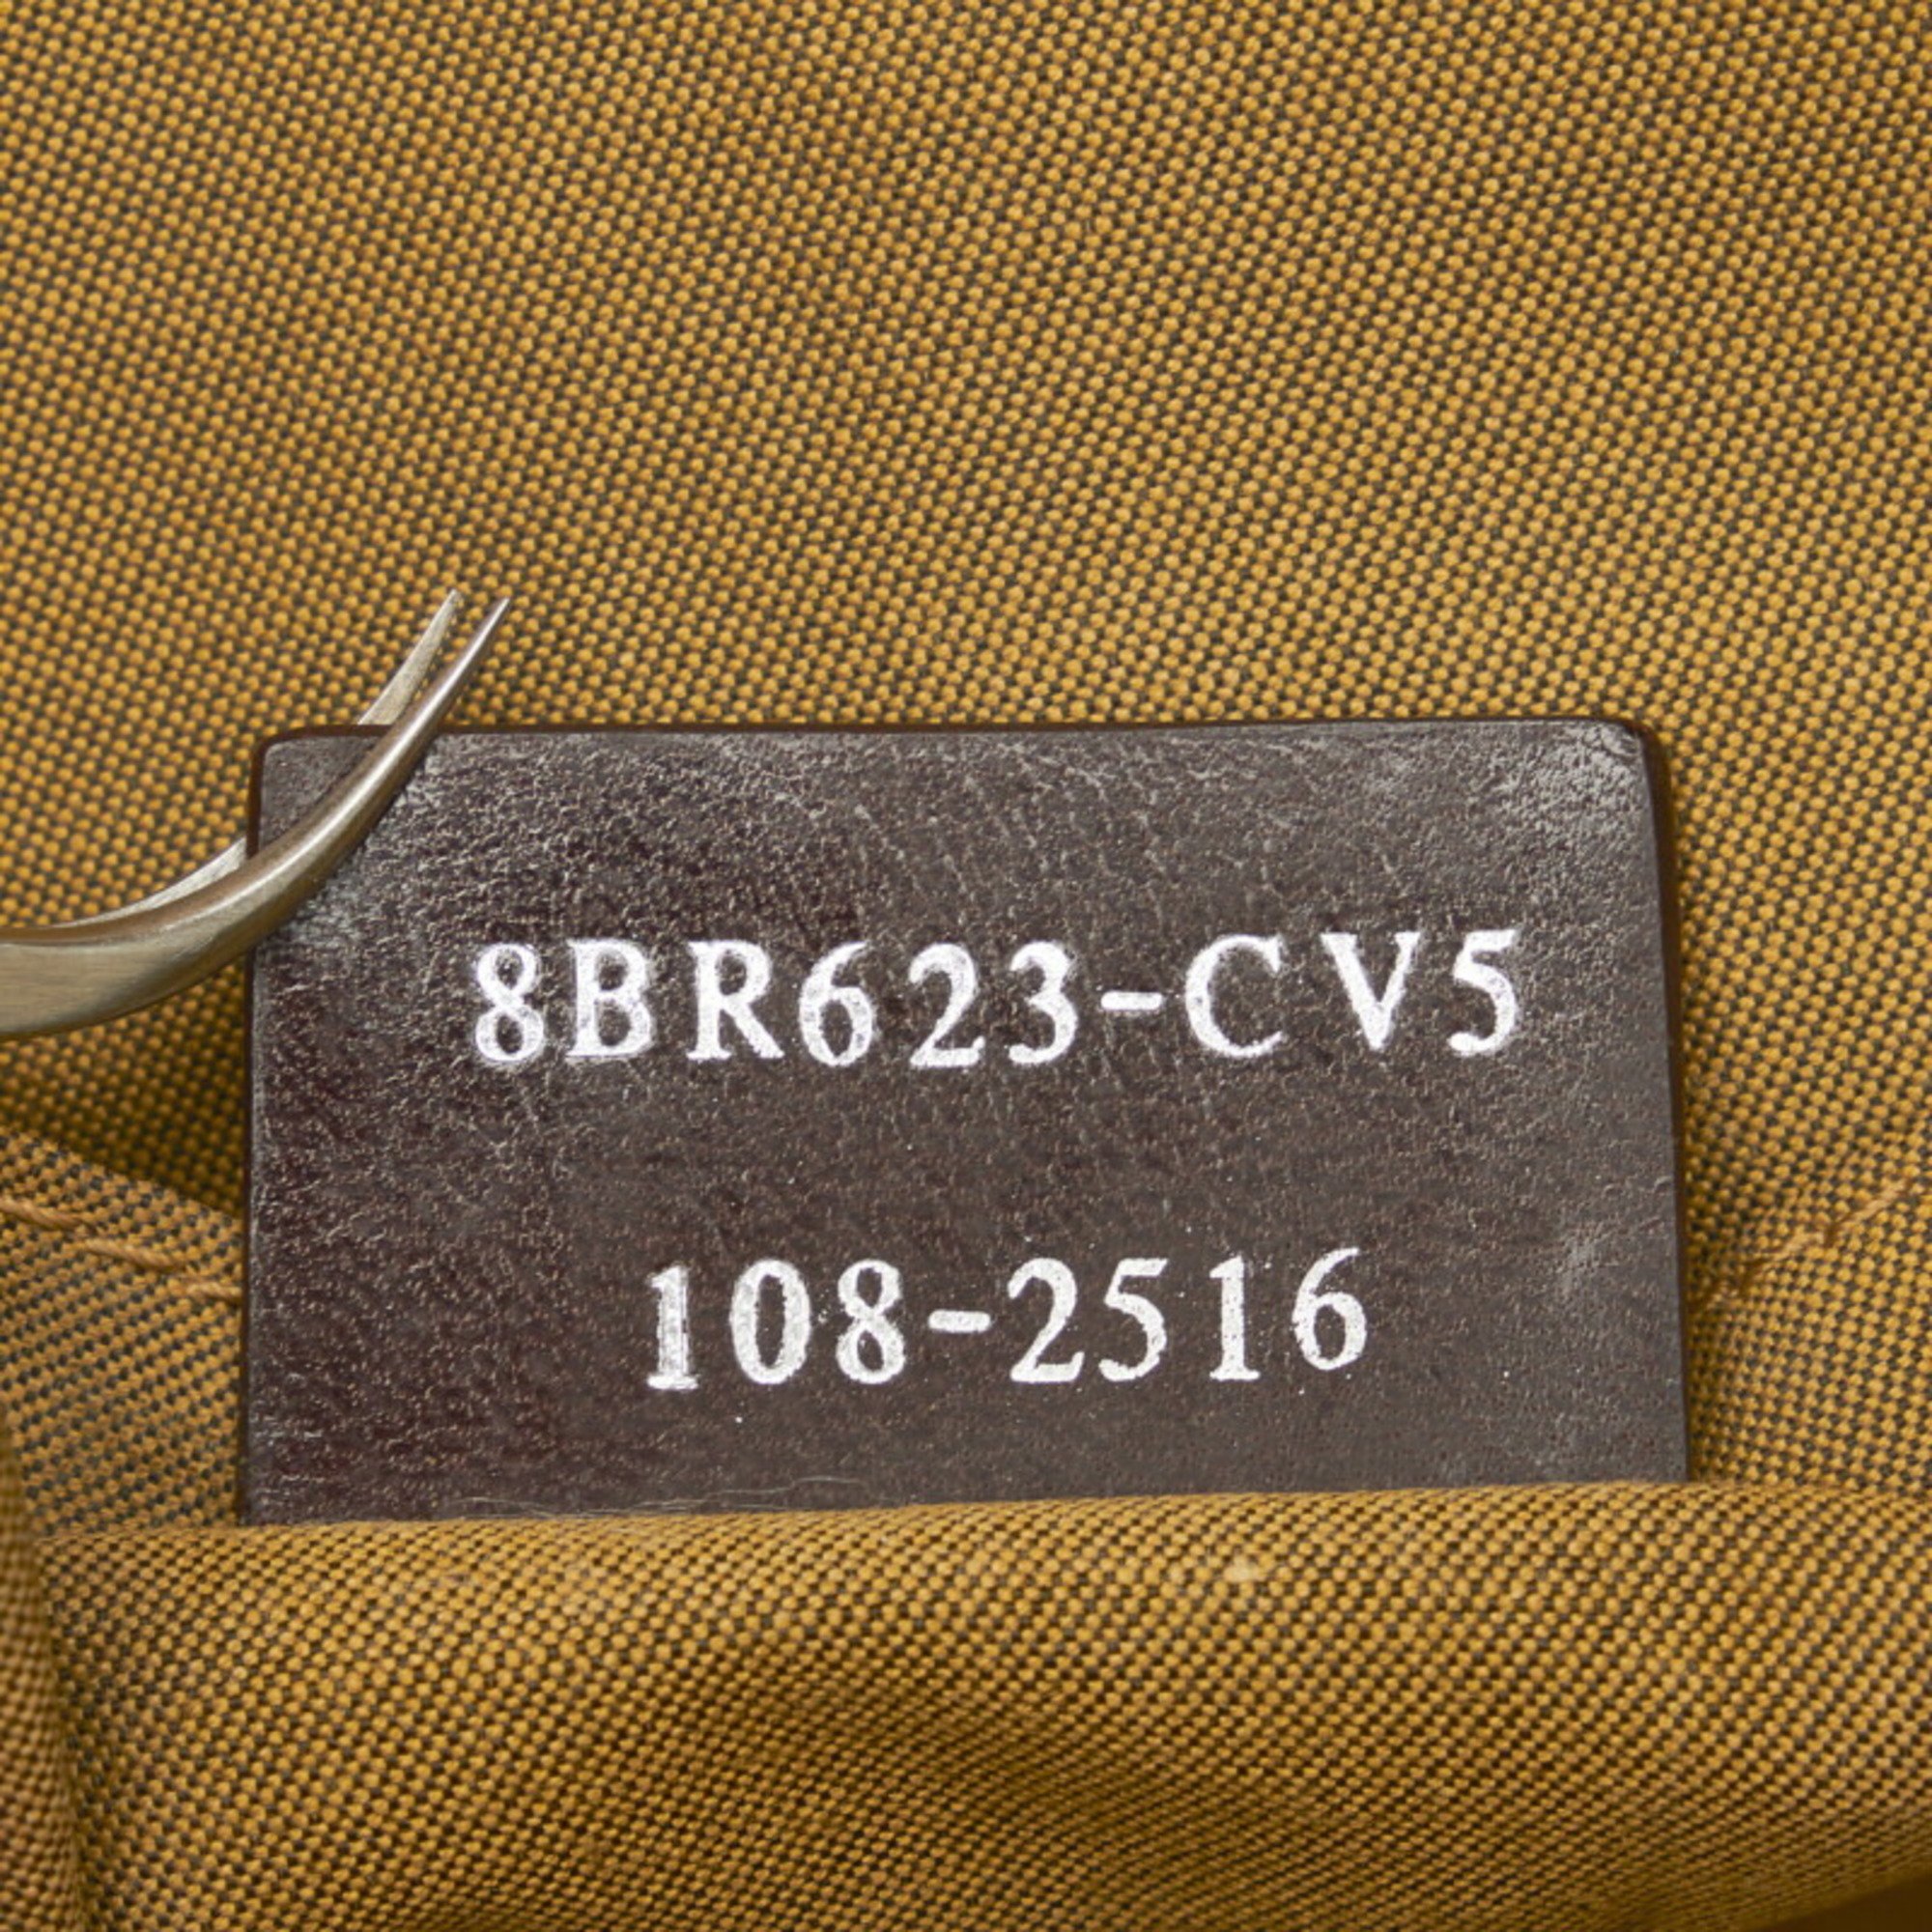 FENDI Zucca Unzipped Handbag Boston Bag 8BR623 Beige Leather Women's